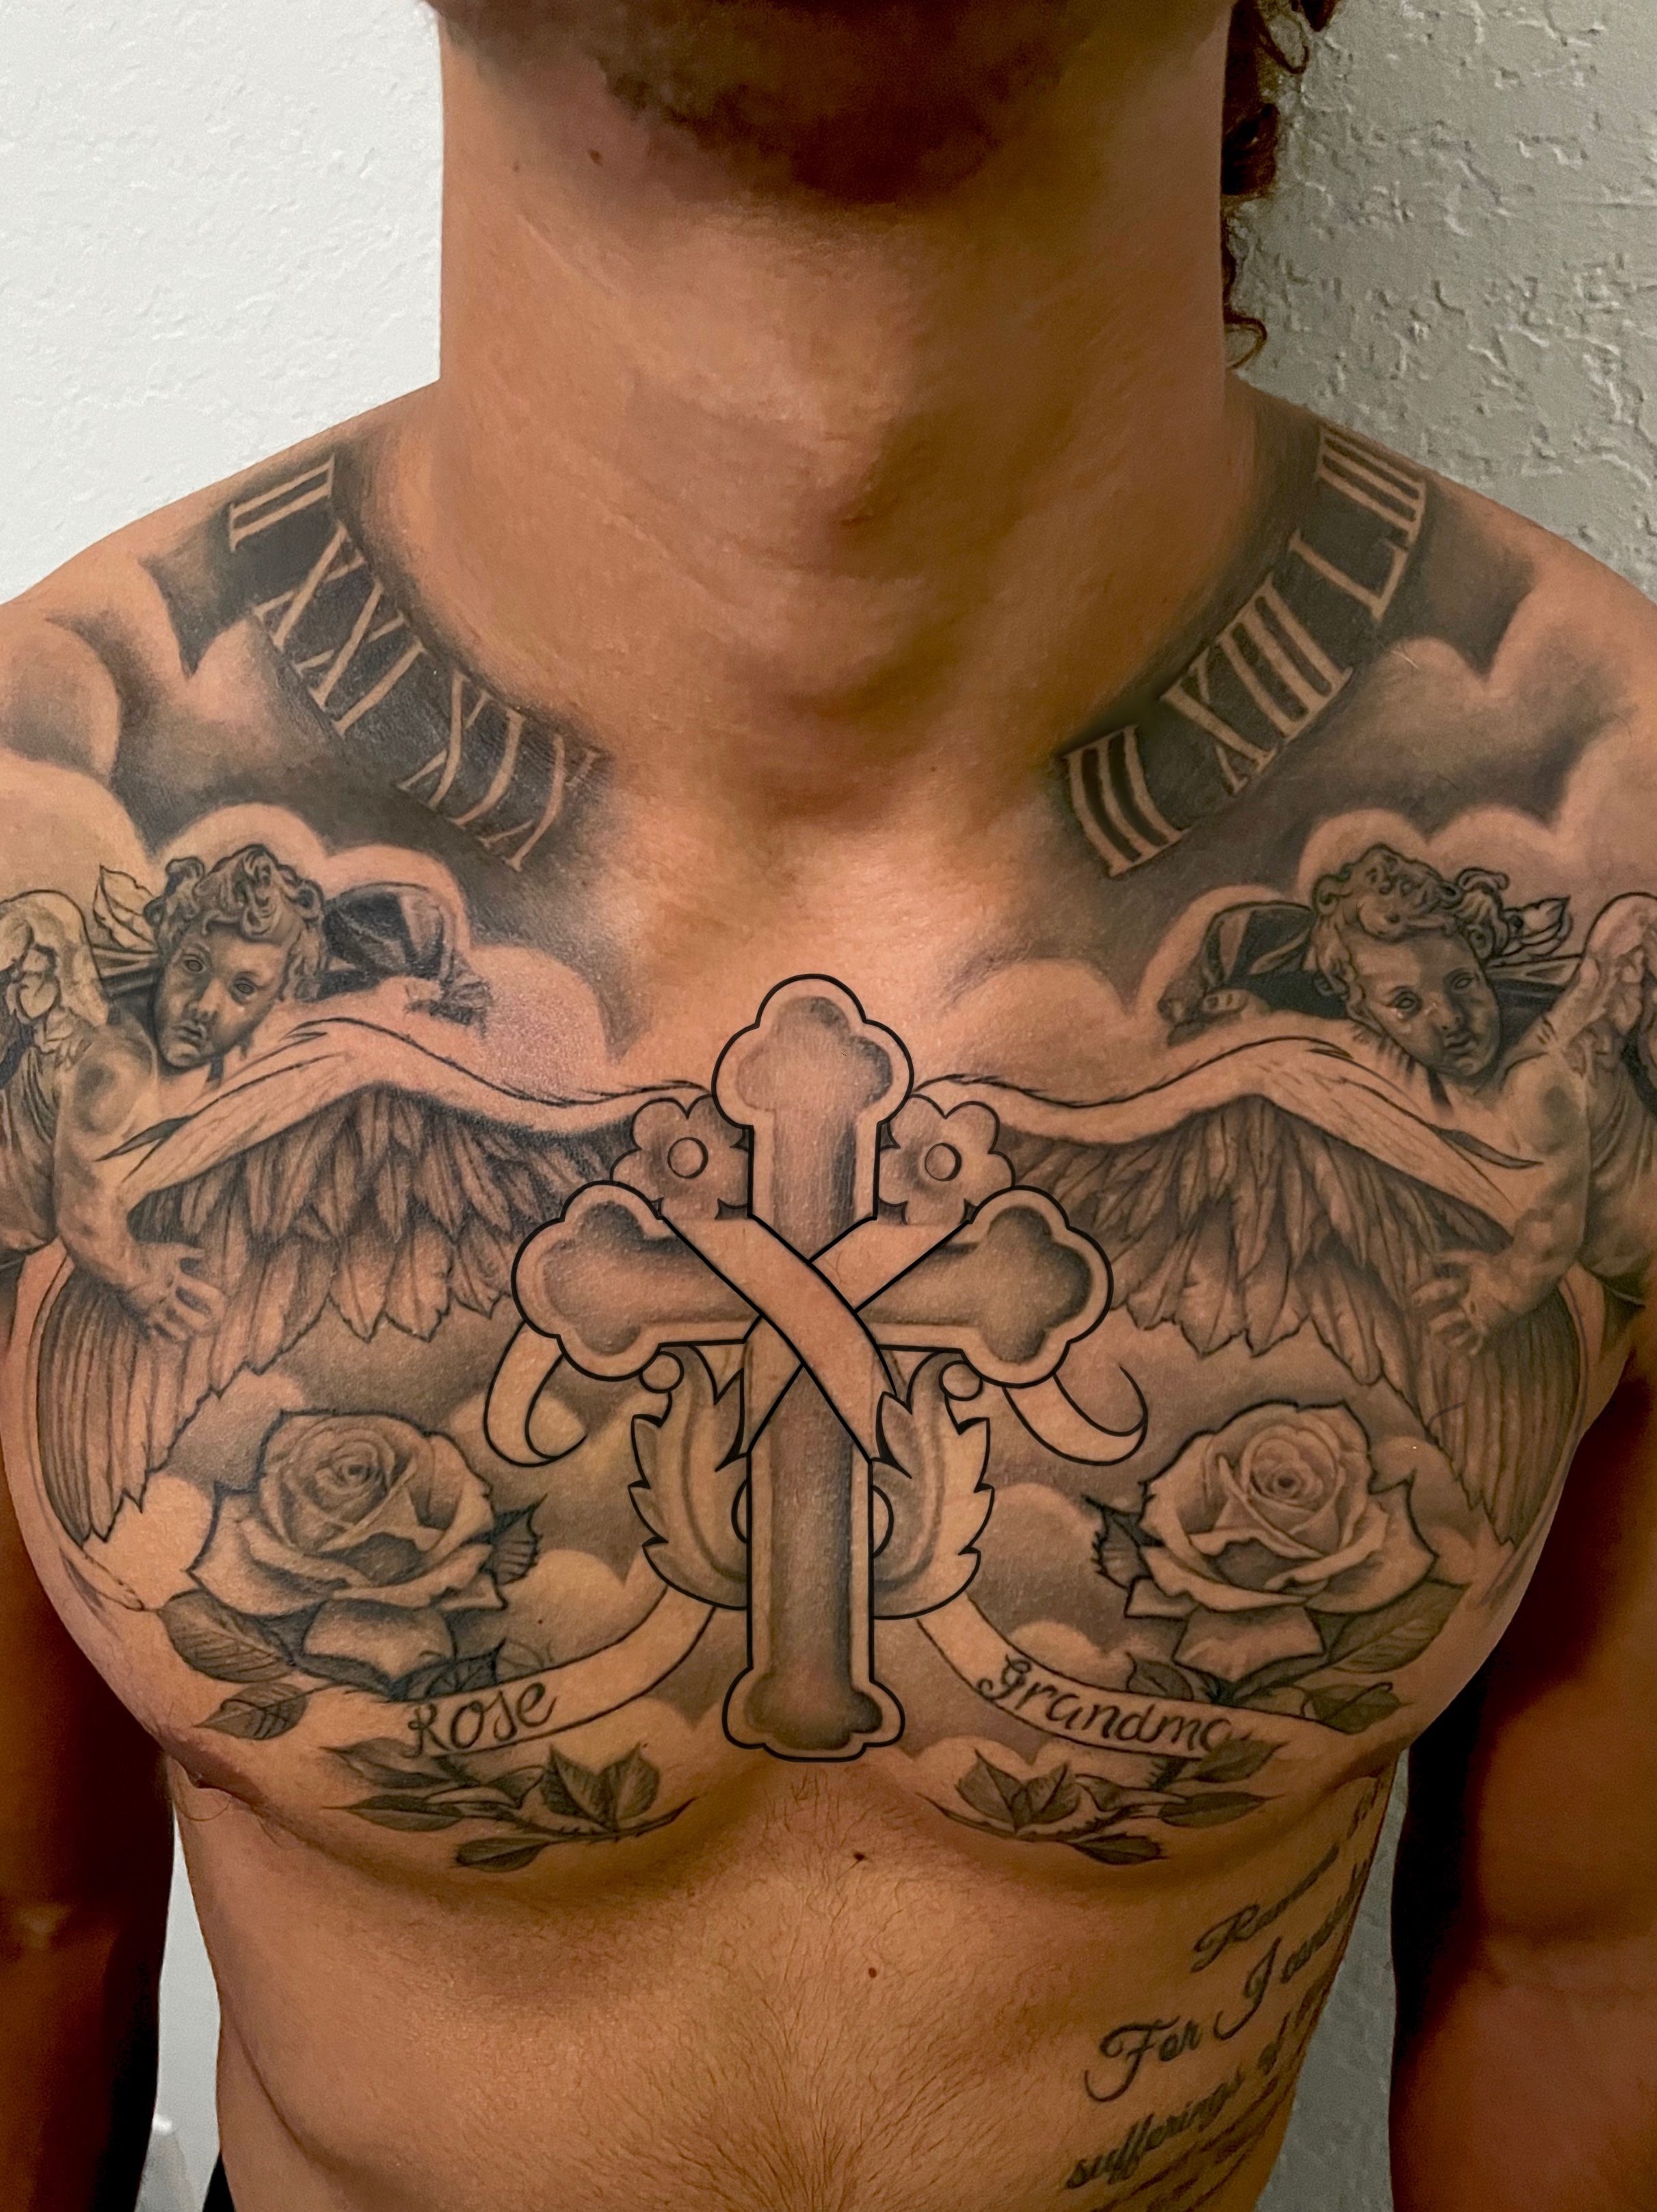 Unique Tattoos - Worldwide Tattoo & Piercing Blog